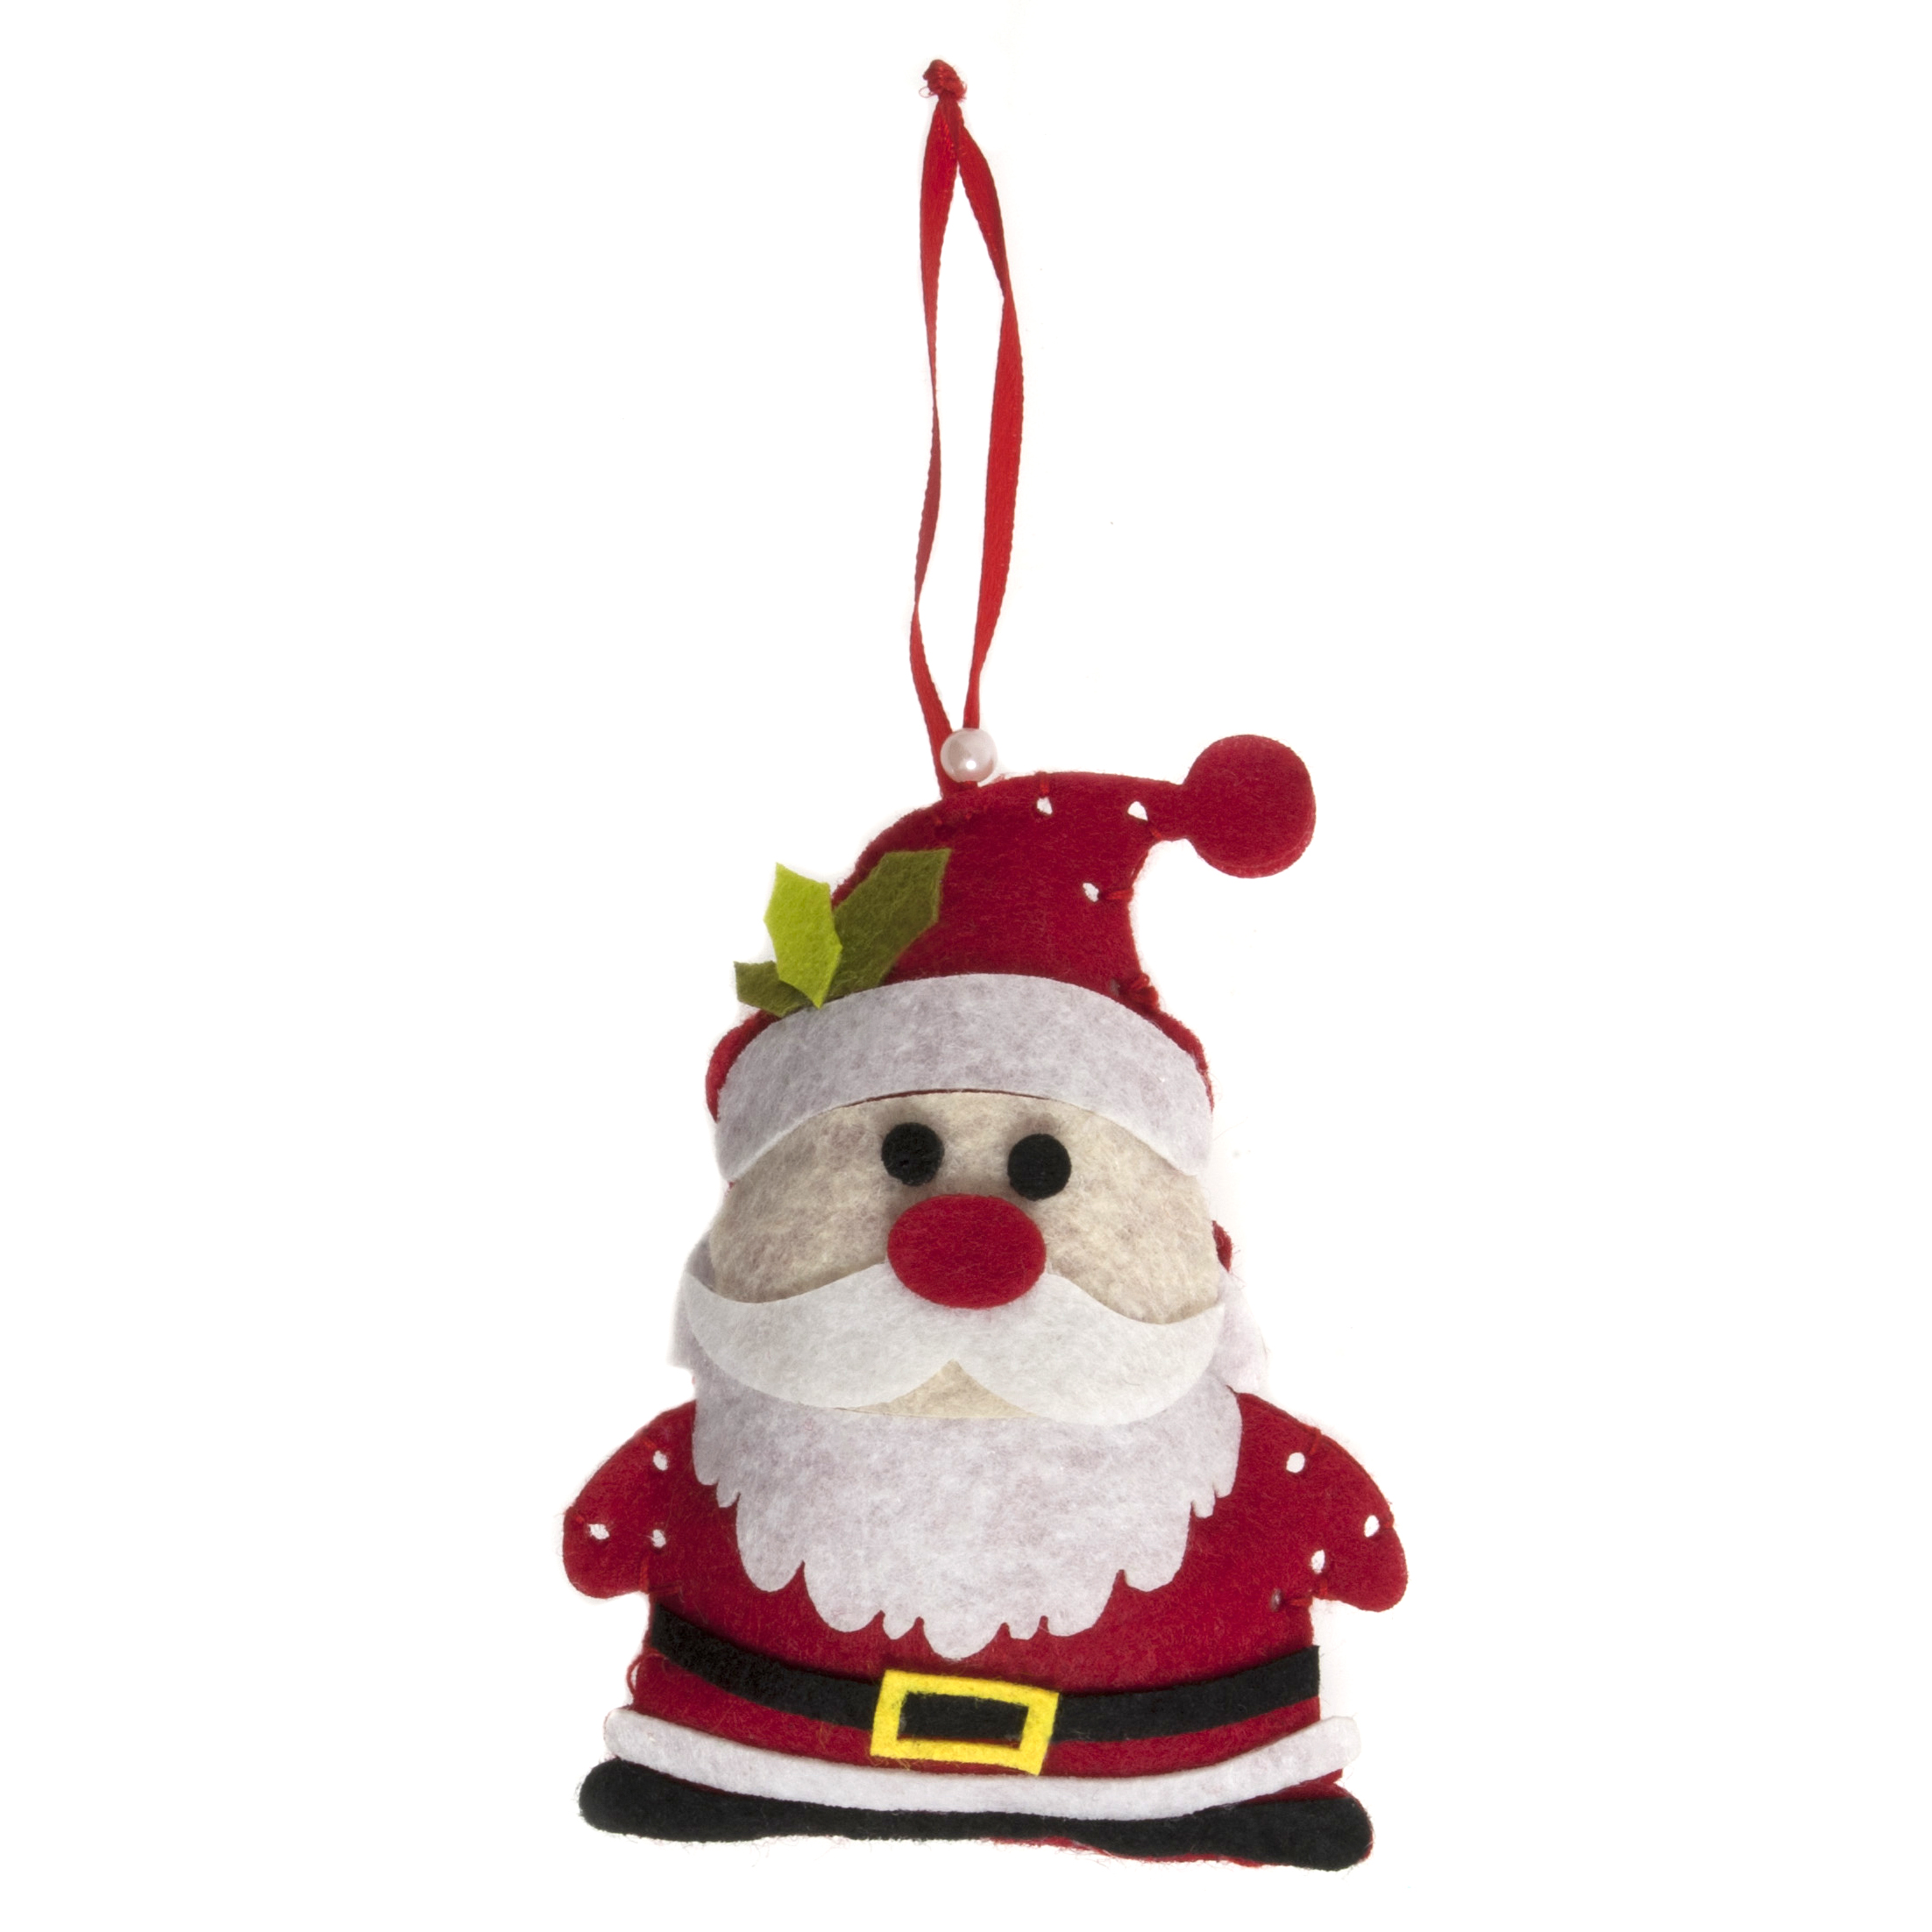 Felt Decoration Kit - Christmas: Santa